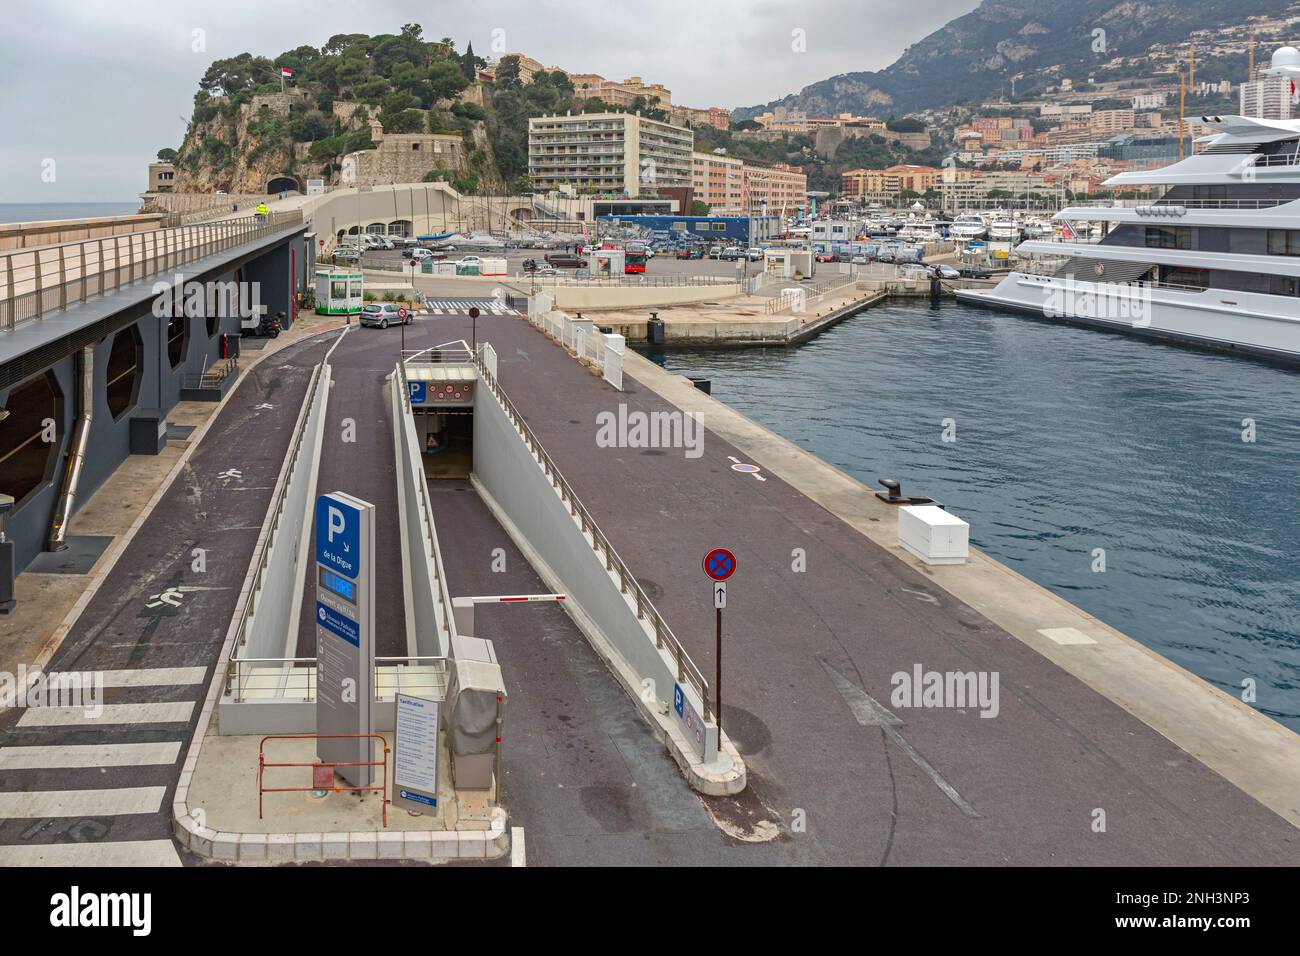 Monaco - February 2, 2016: Column Sign Direction Arrow to Underground Parking Ramp Way at Port. Stock Photo